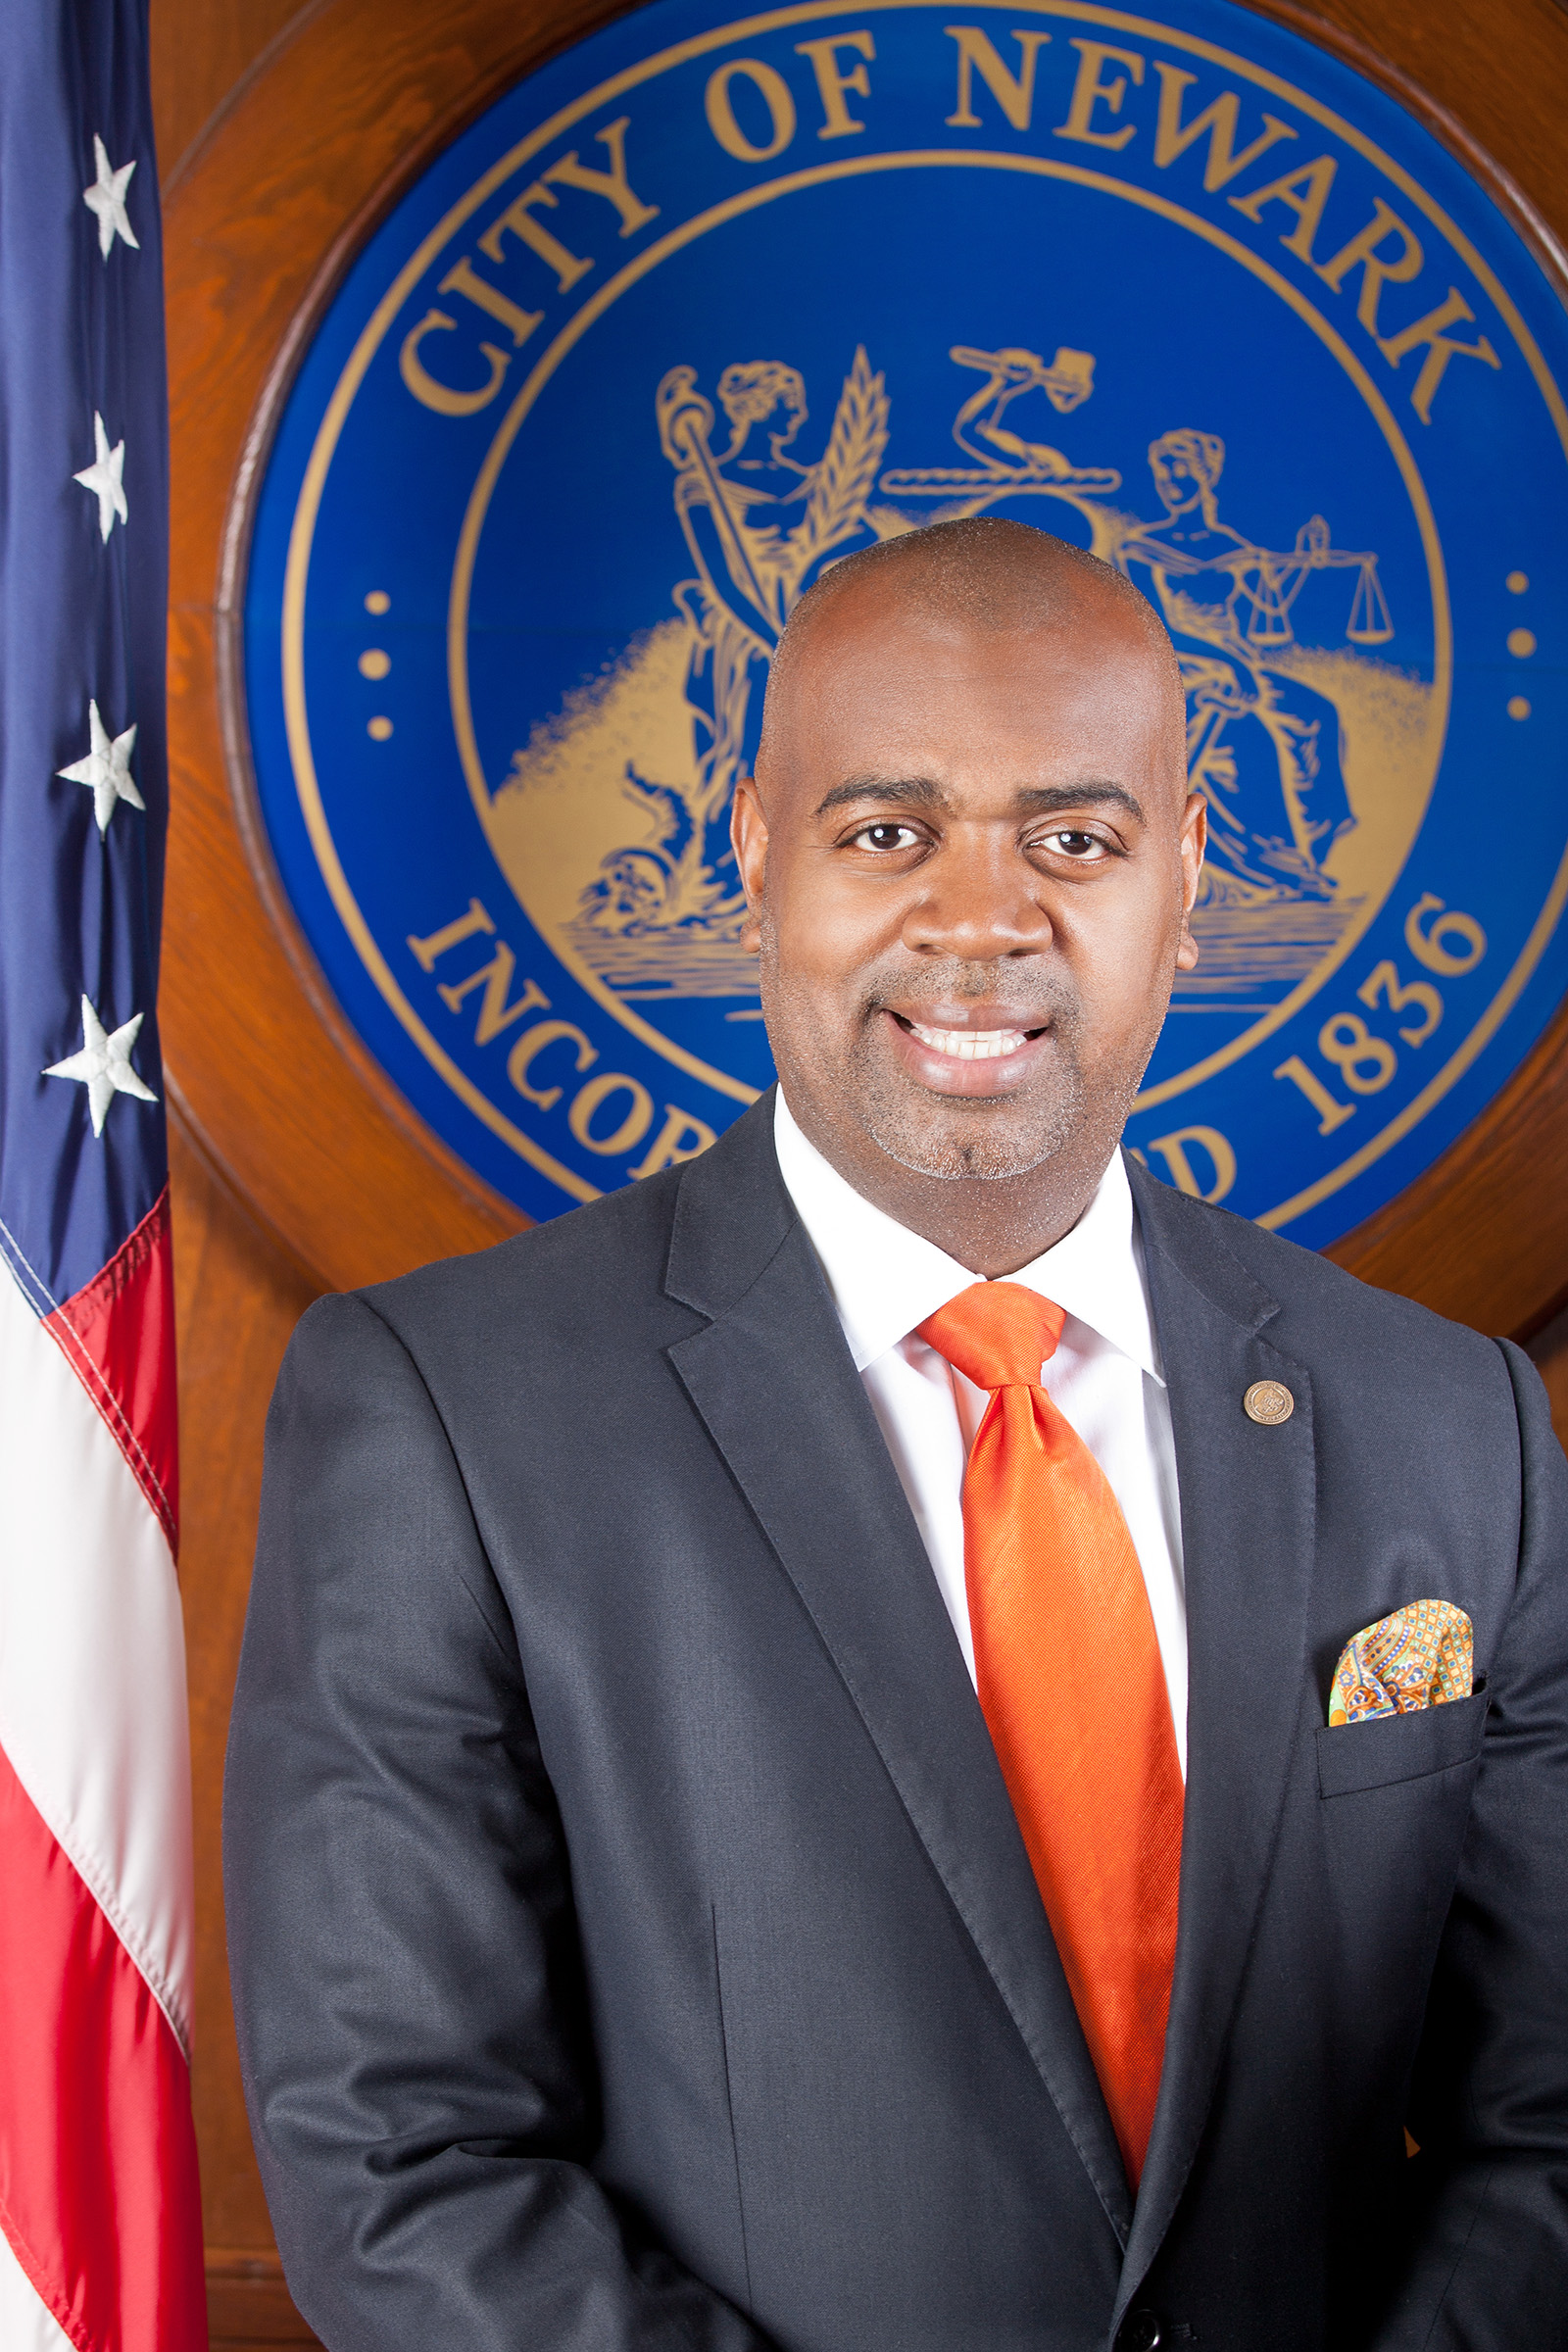 Newark Mayor Ras J. Baraka